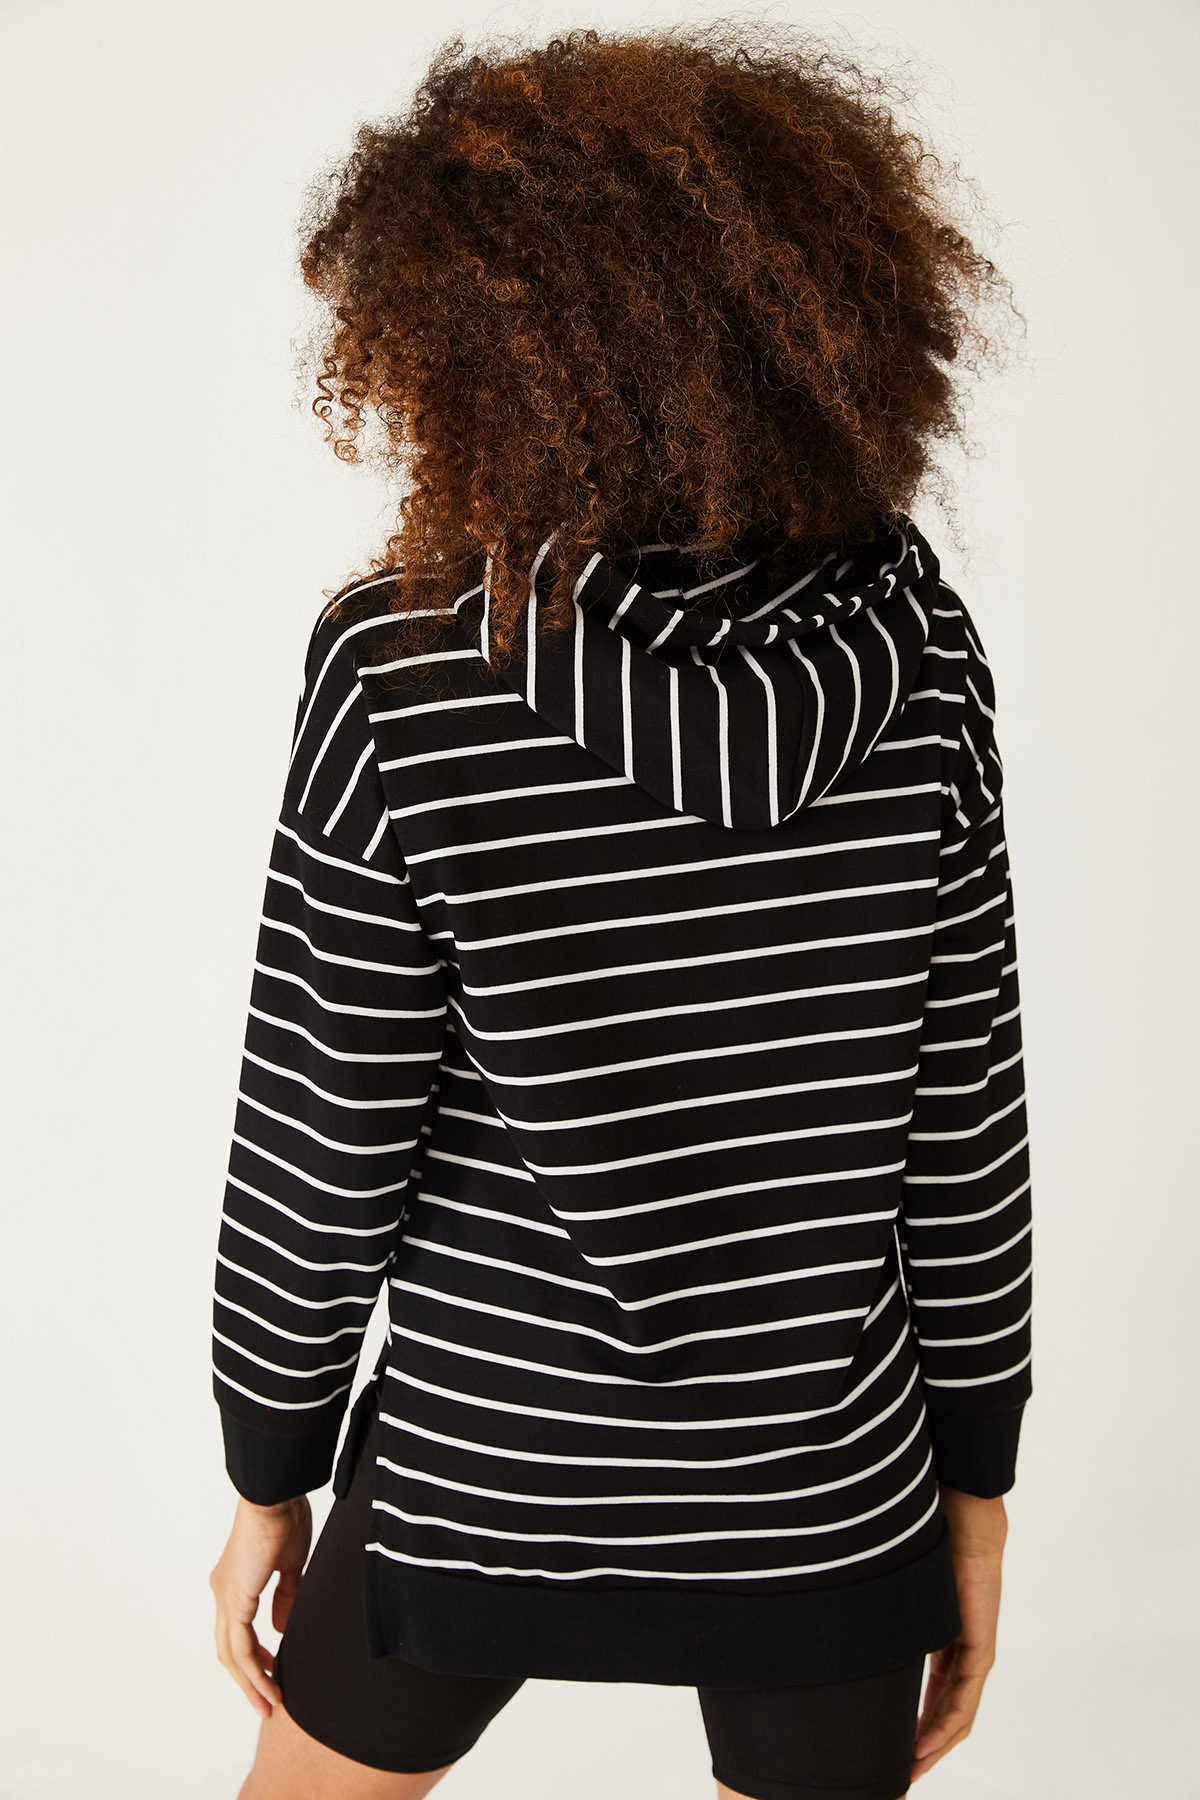 Siyah & Beyaz Çizgili Sweatshirt 1KXK8-44429-02 - 2